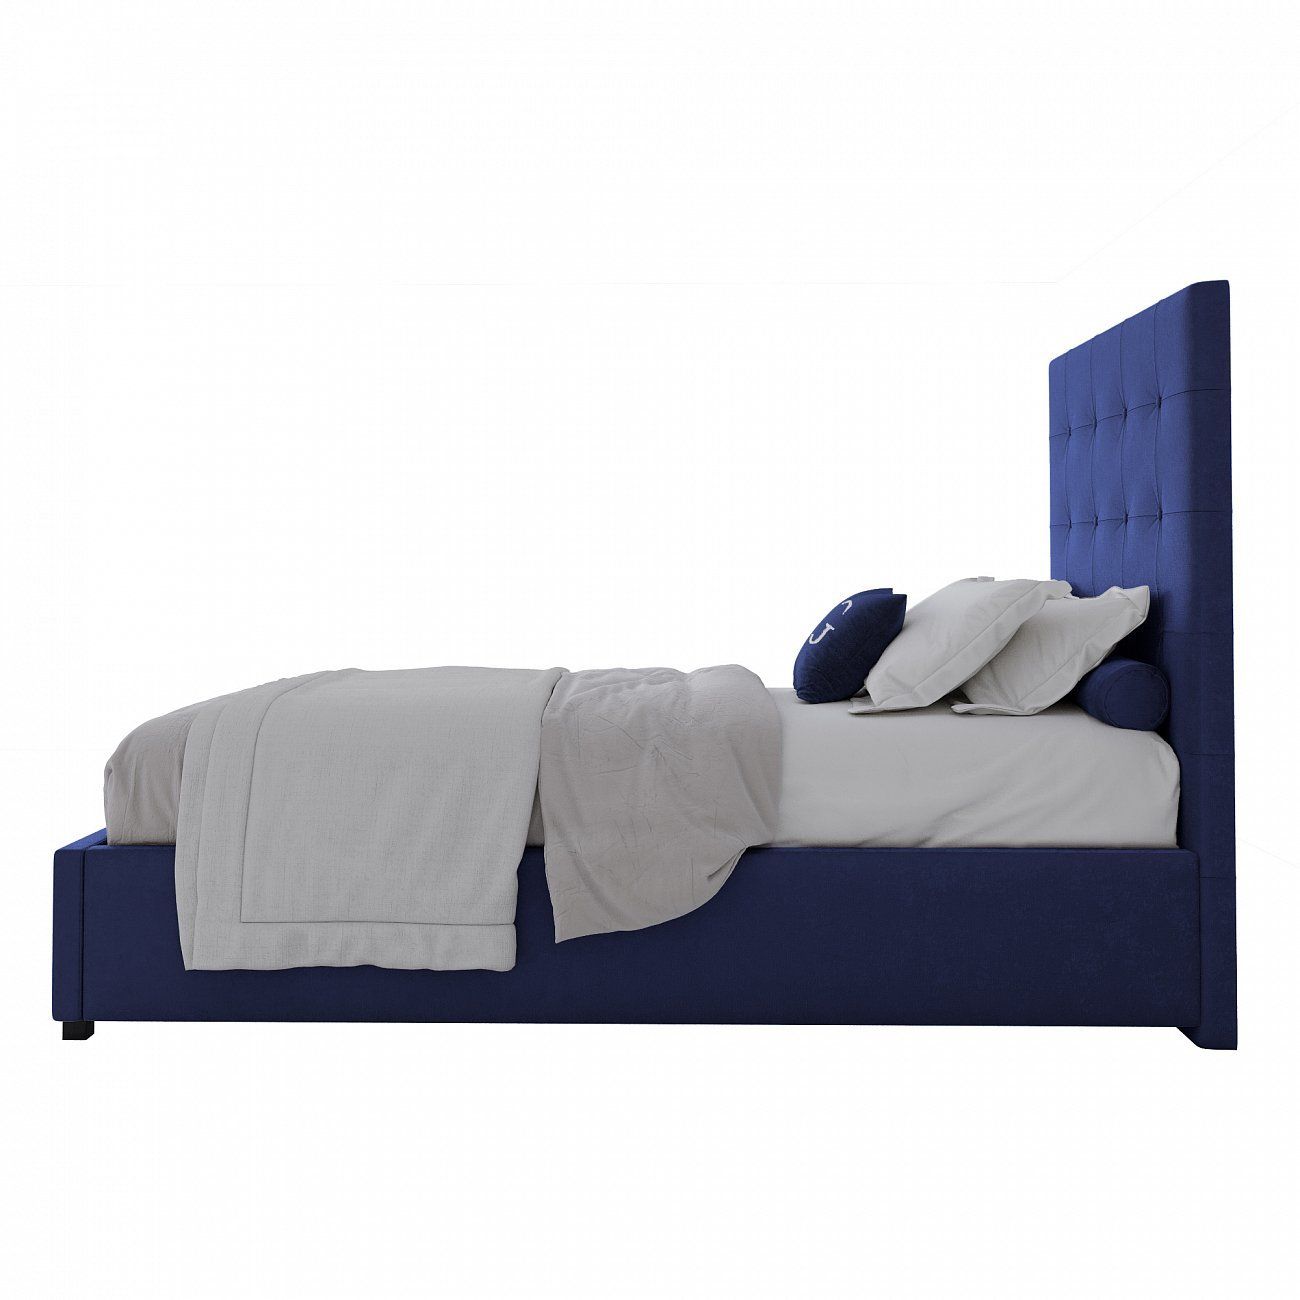 Single bed 90x200 blue velour Royal Black P